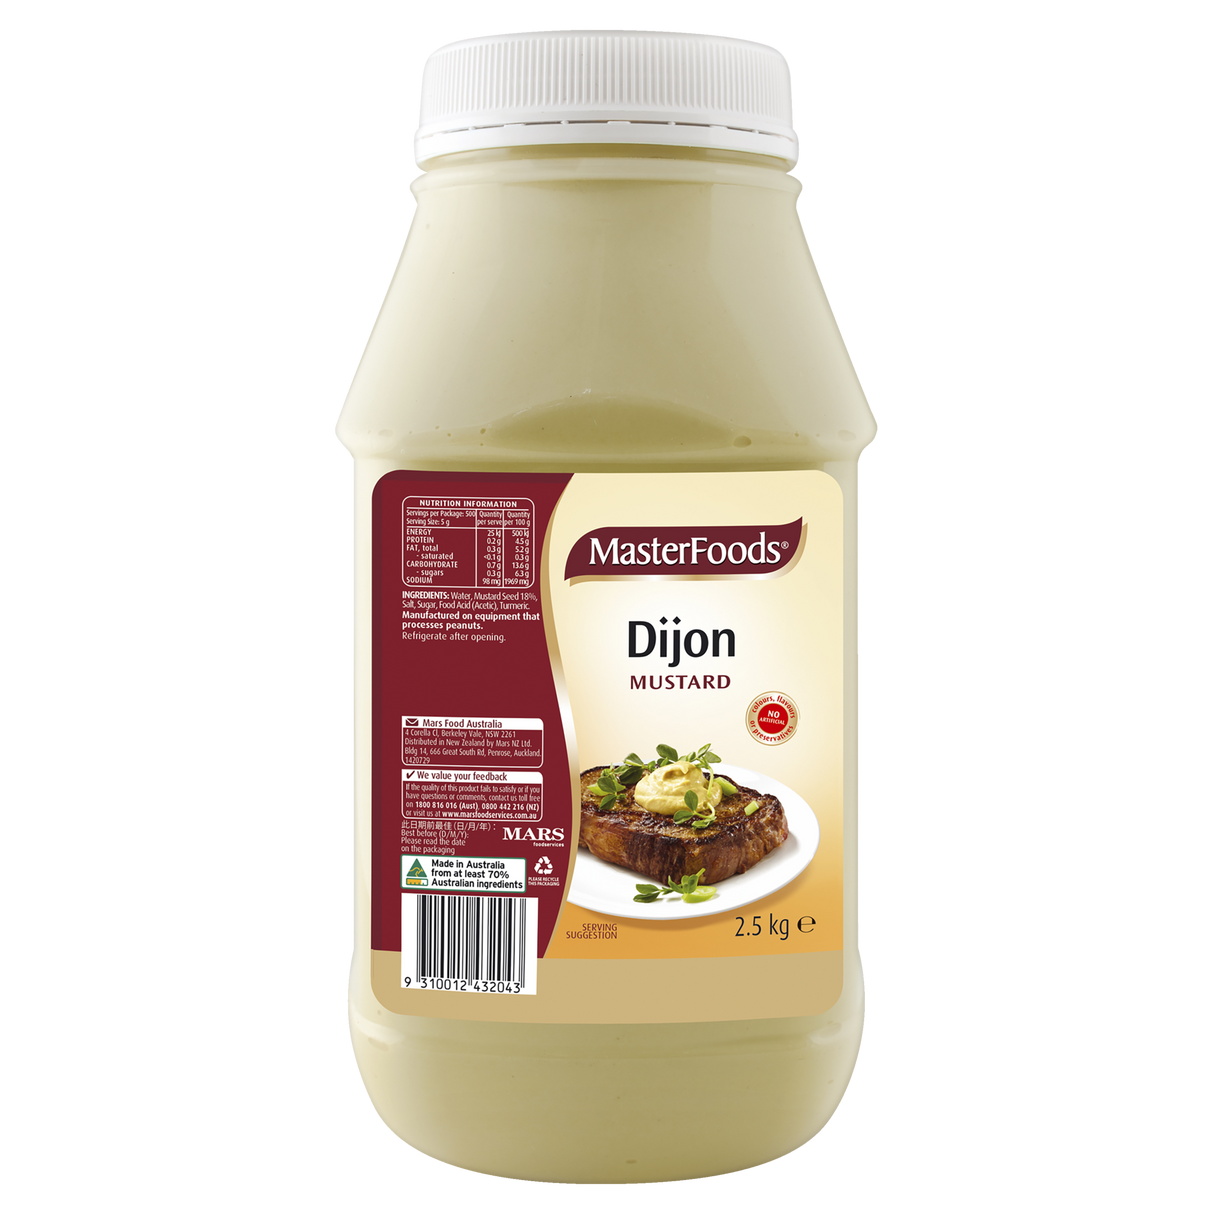 MasterFoods Dijon Mustard 2.5kg